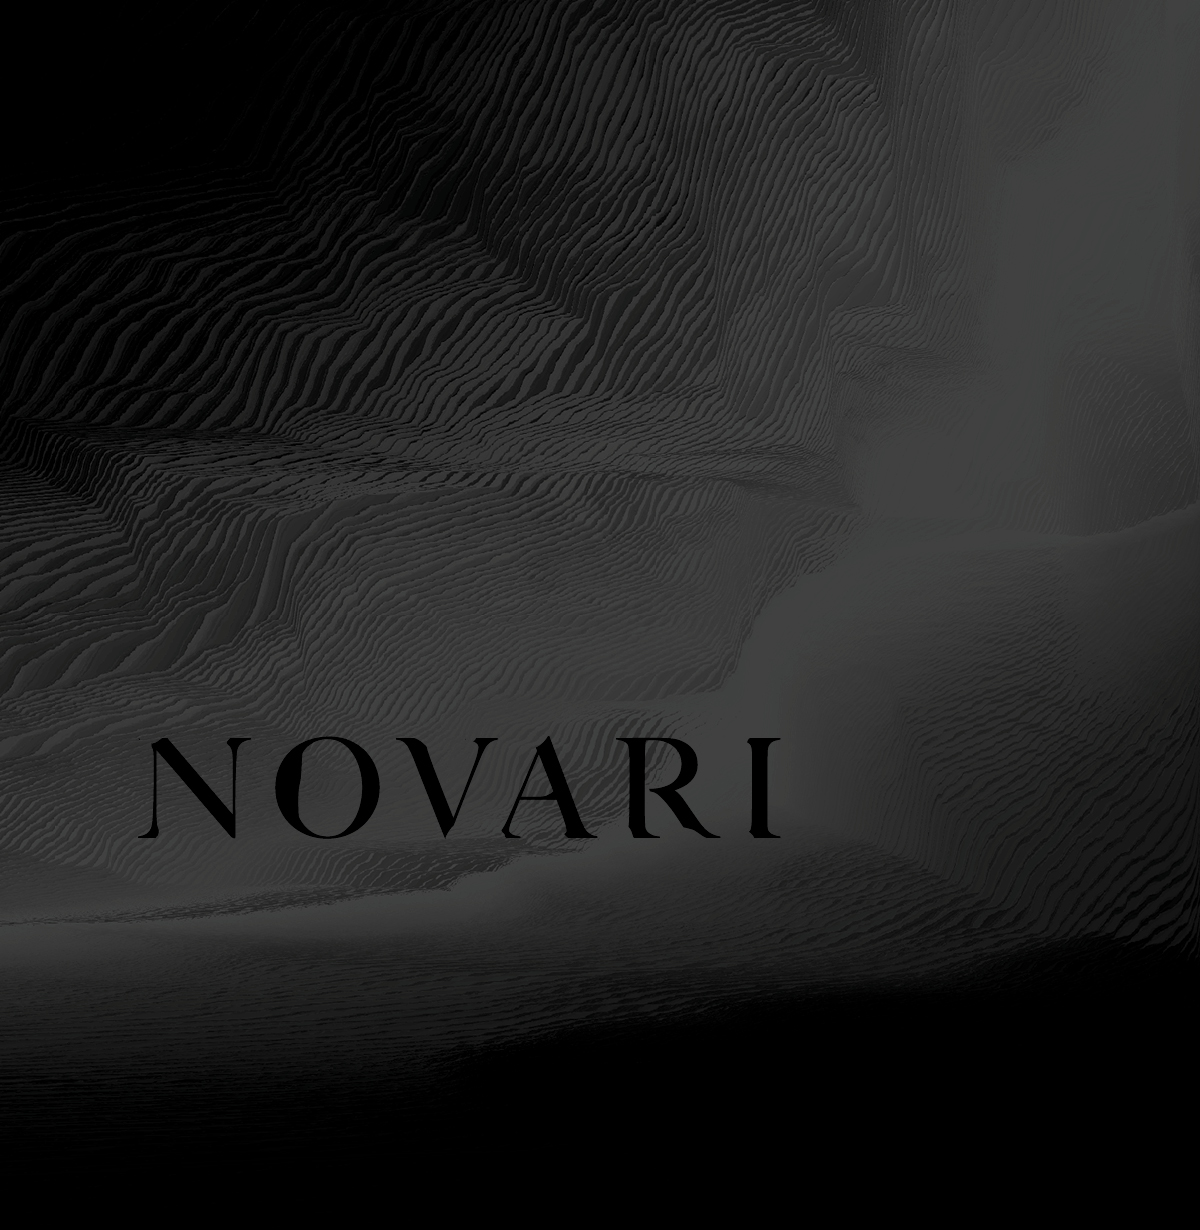 NOVARI - Clothing brand concept